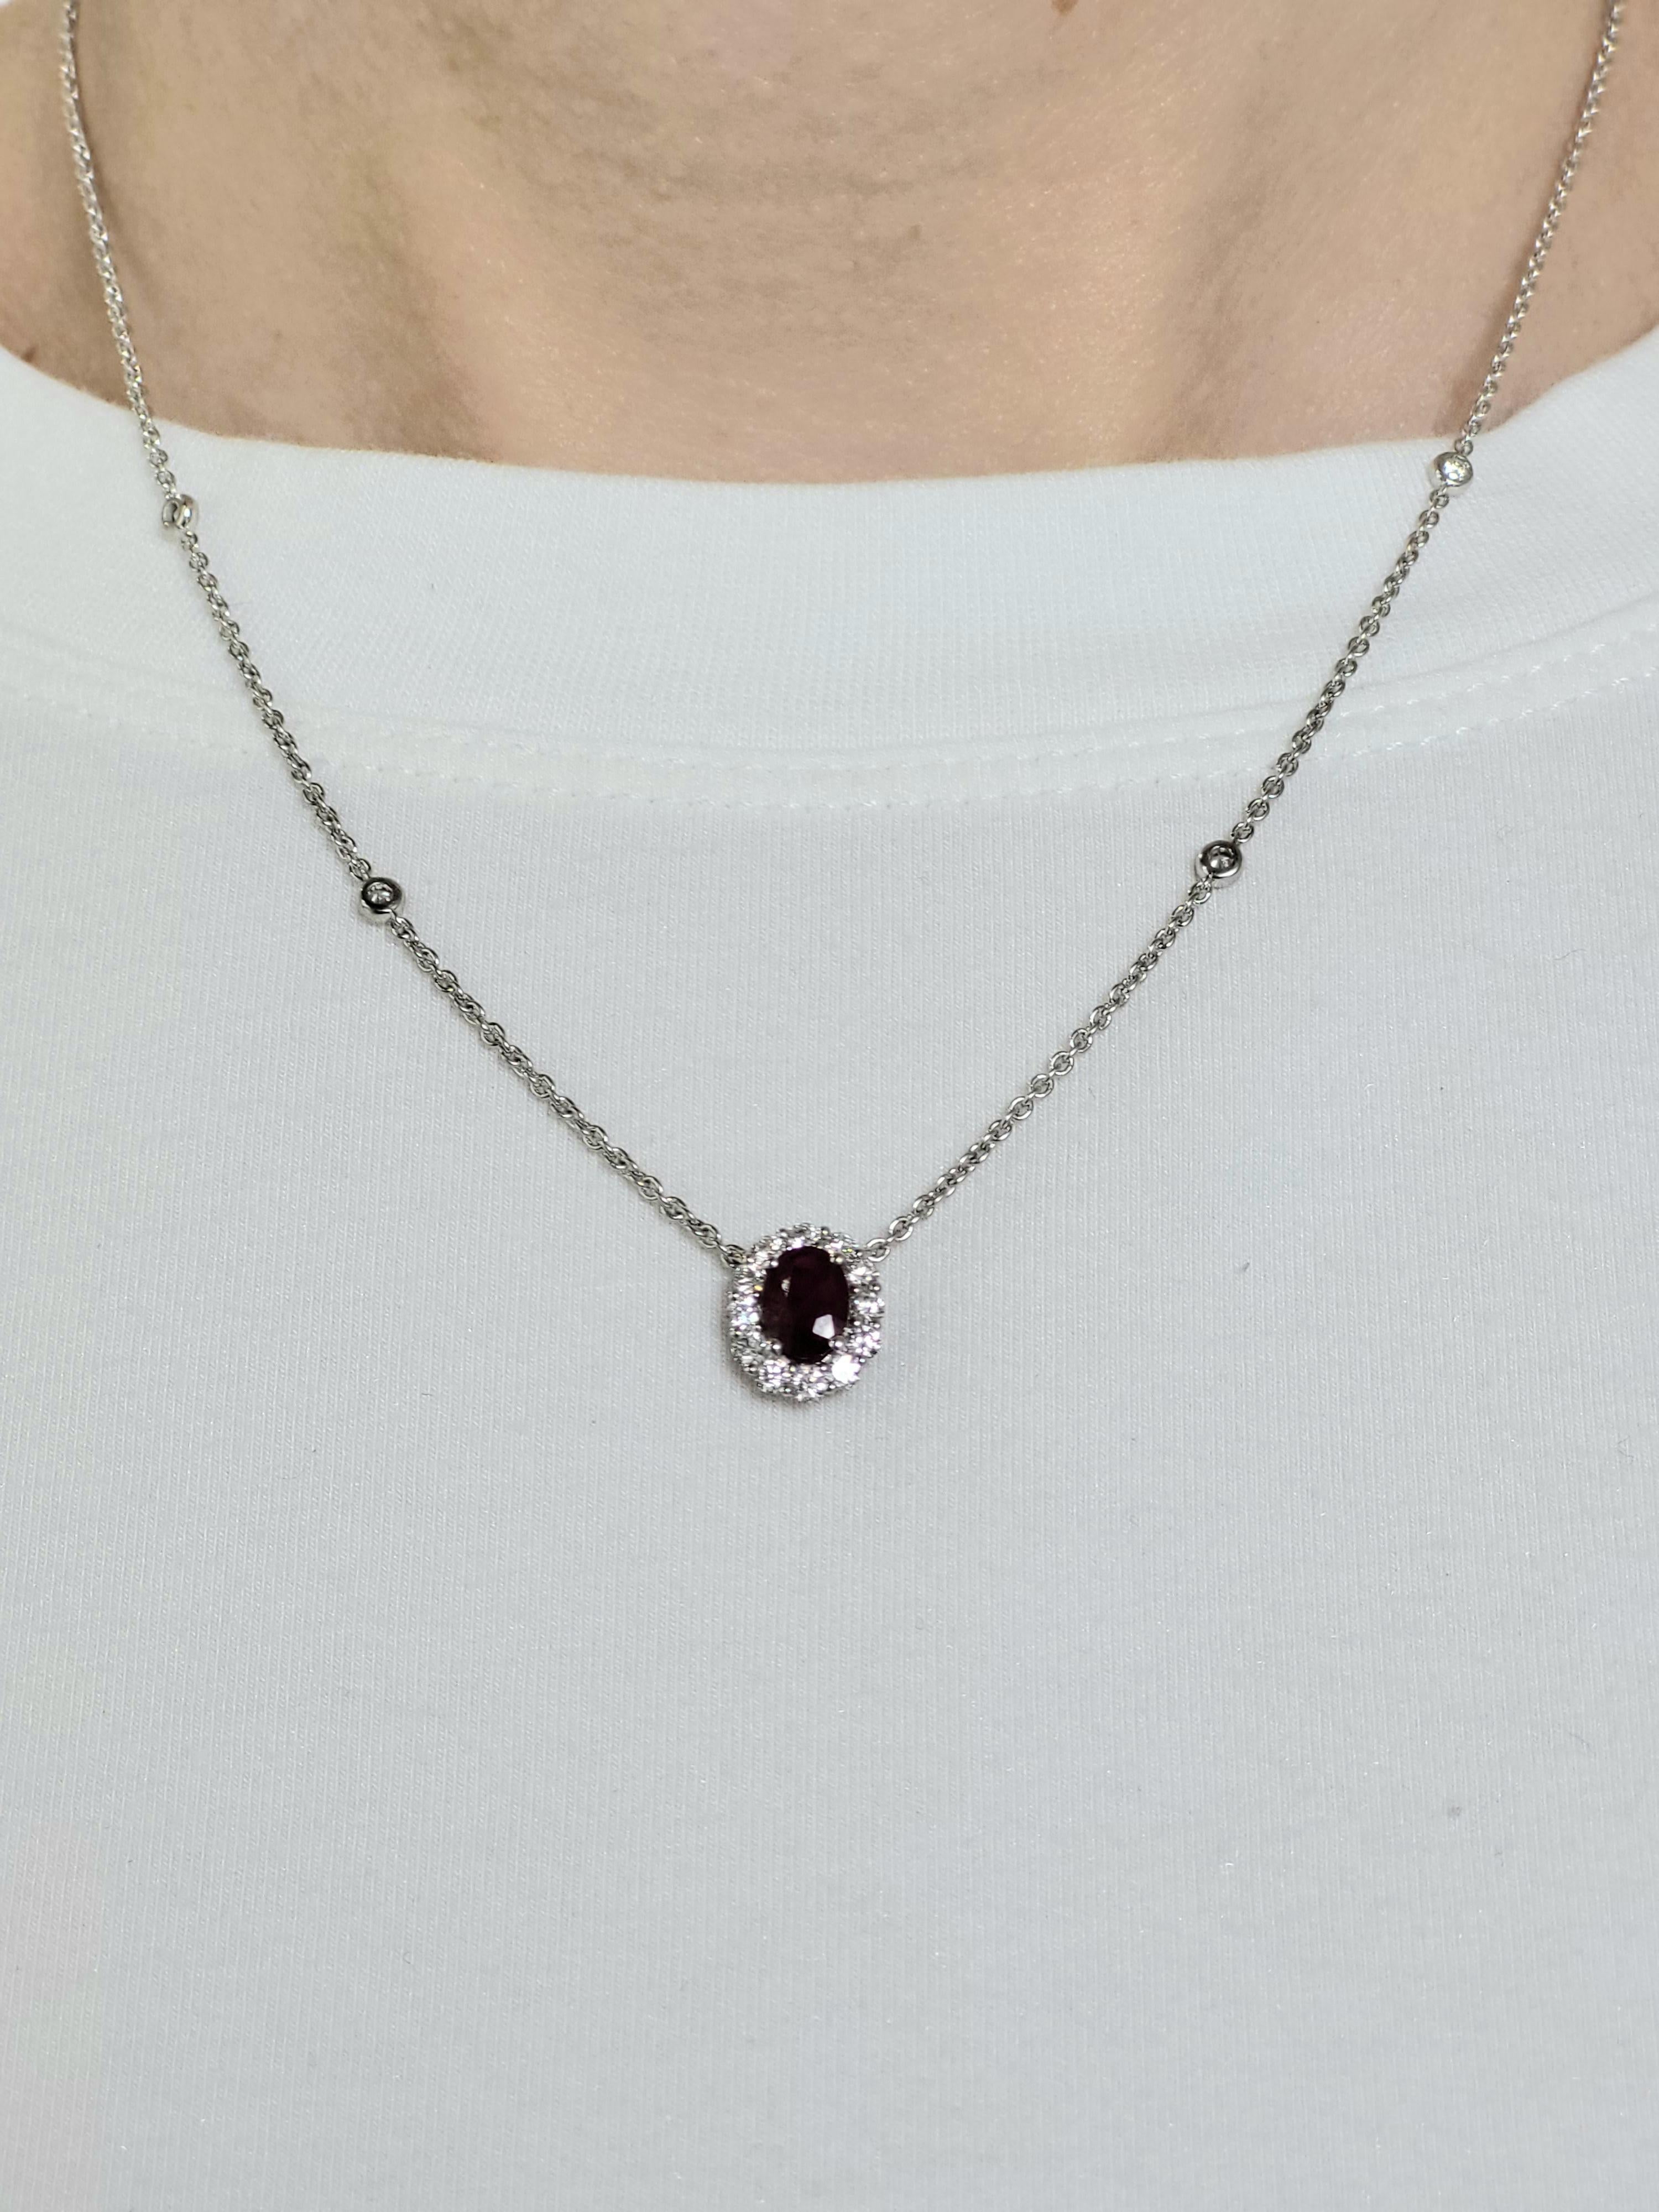 0.71 Carat Oval Cut Natural Ruby & Diamond Pendant Necklace, 18 Karat White Gold For Sale 4